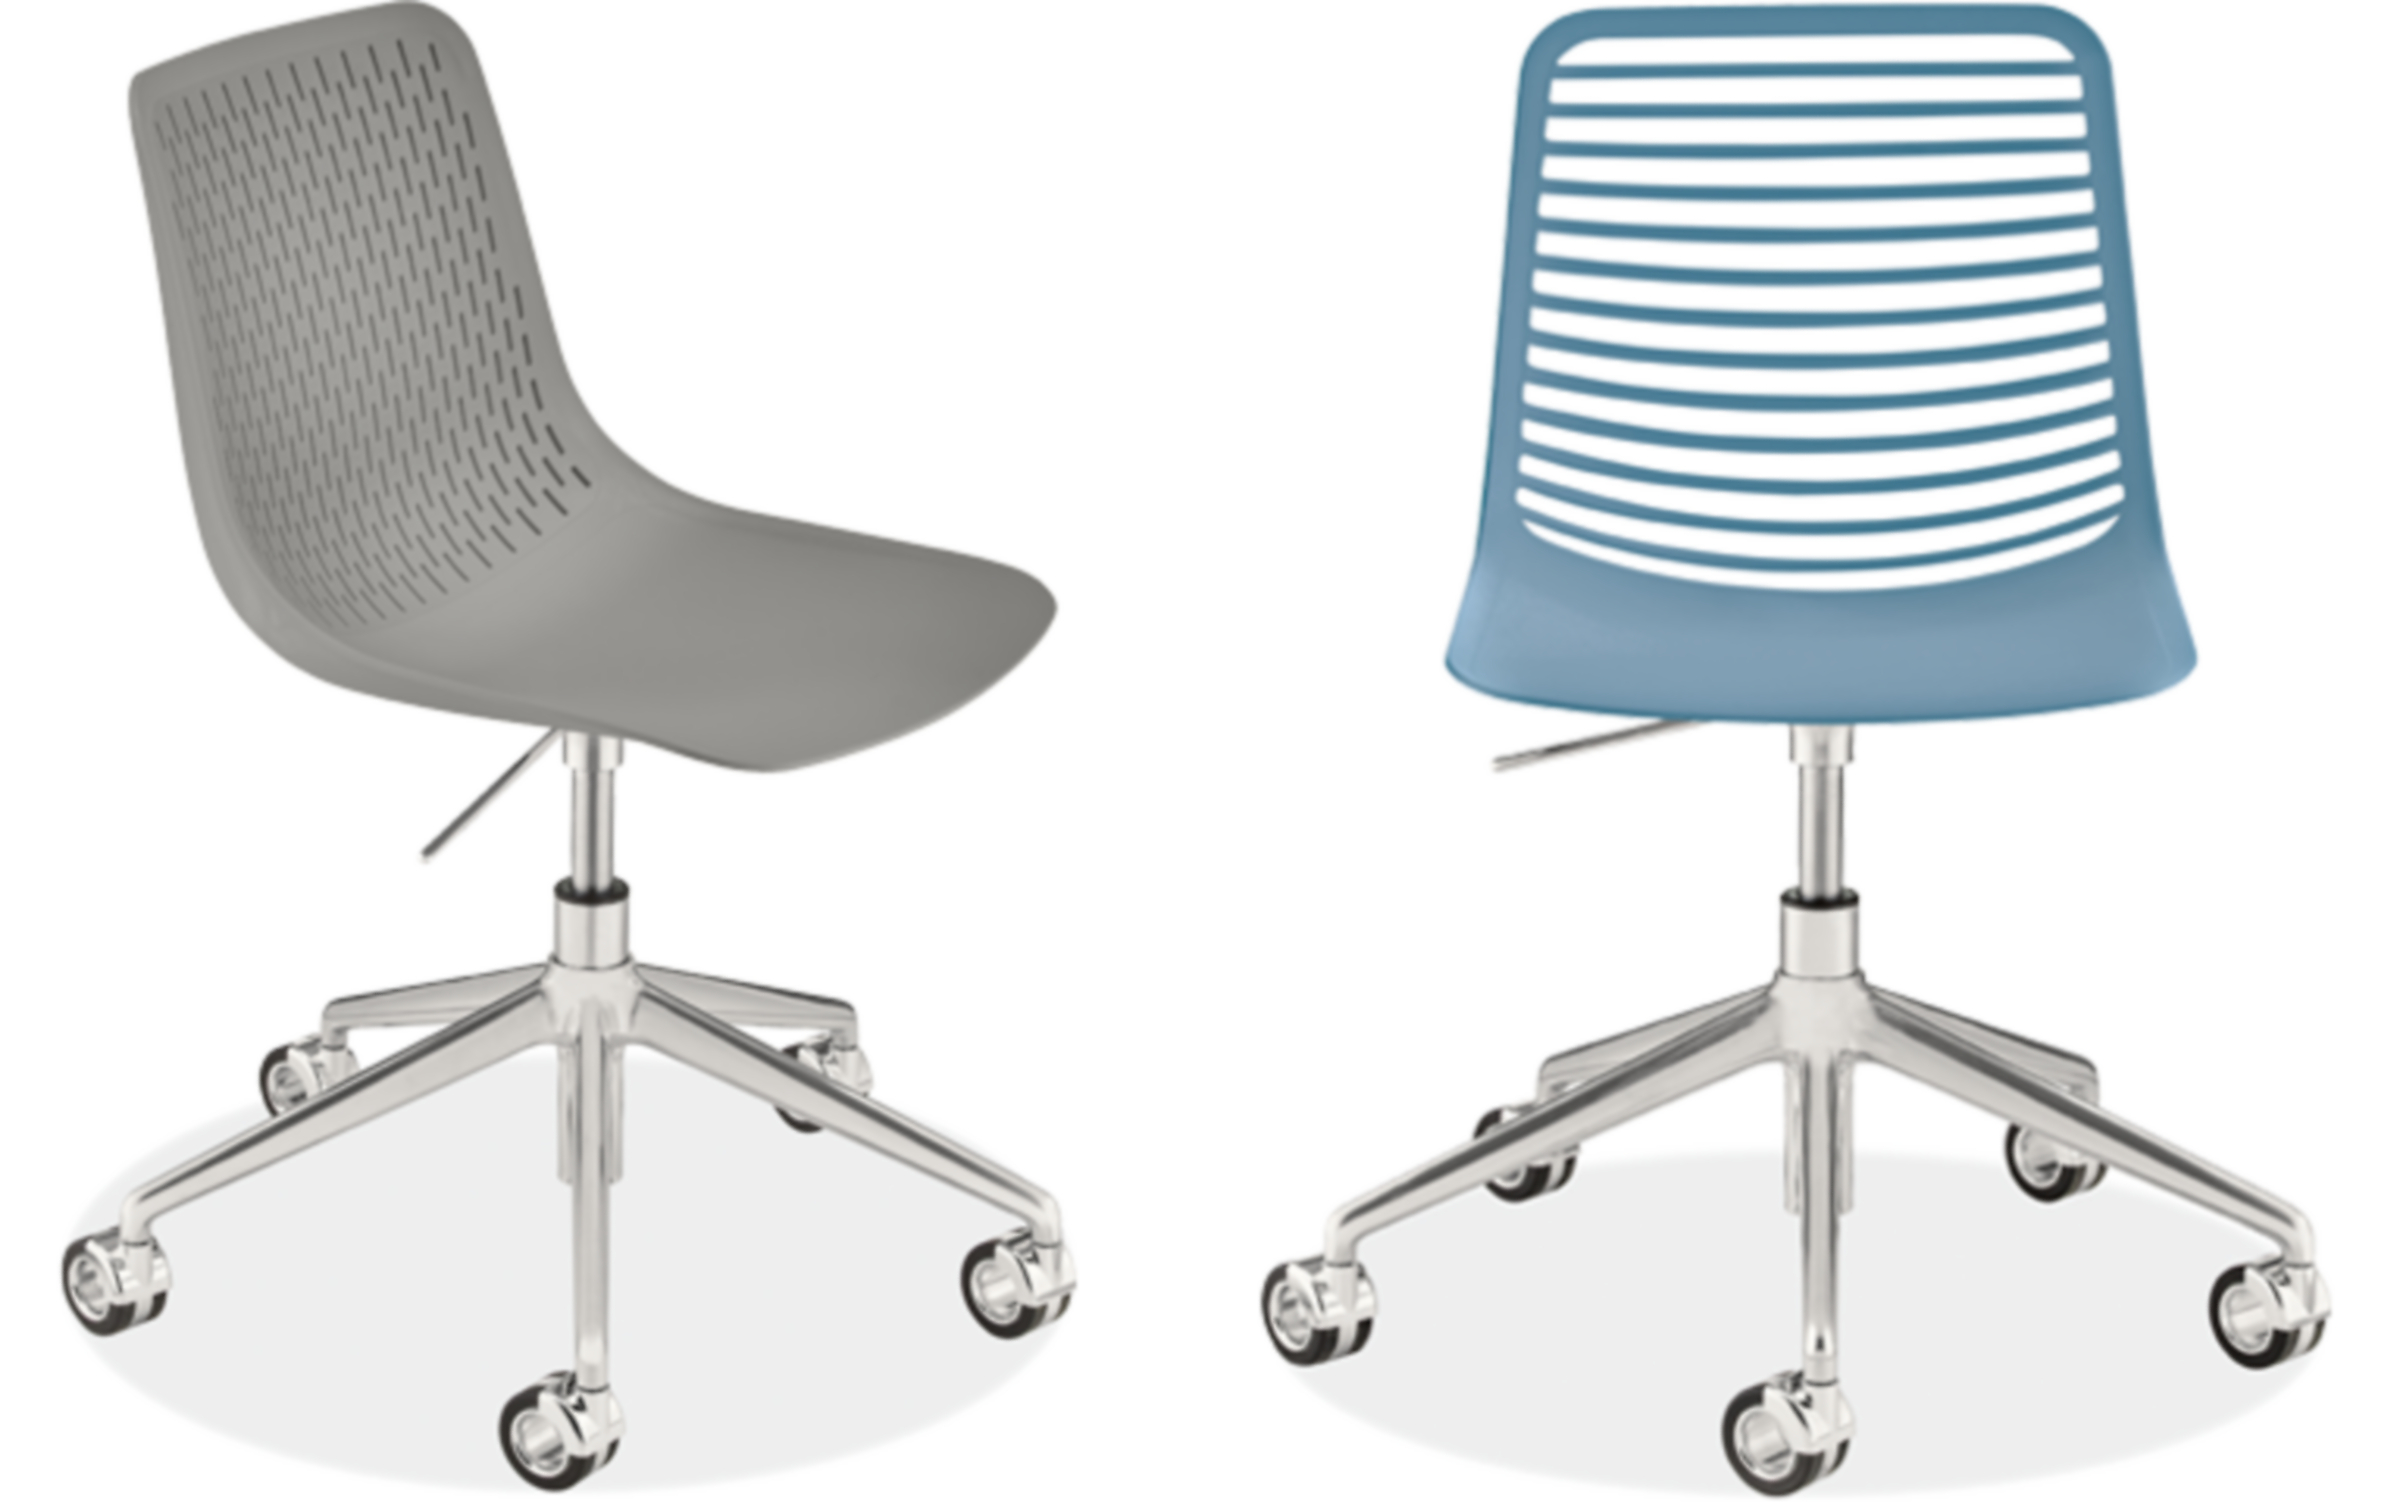 Mini Swivel Office Chairs